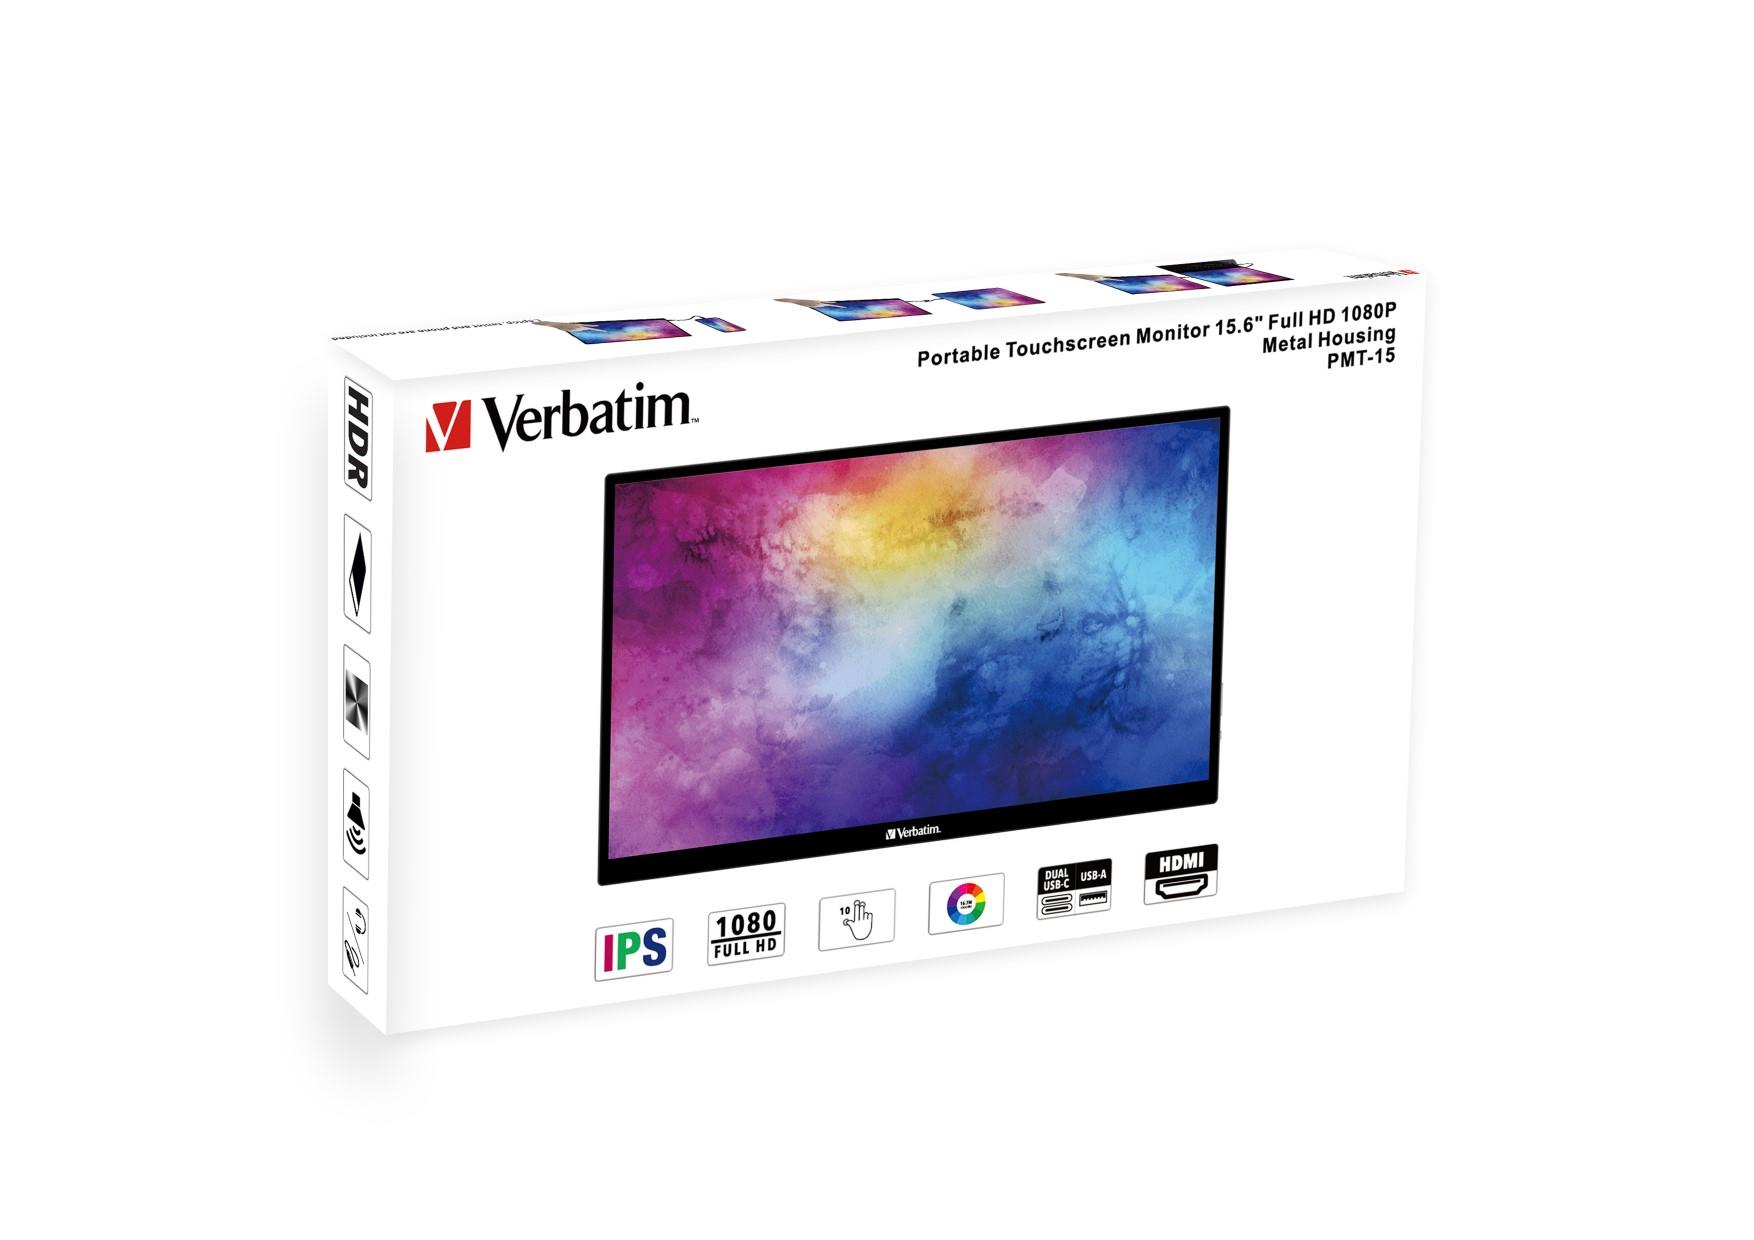 Verbatim PMT-15 Portable Touchscreen Monitor 15.6